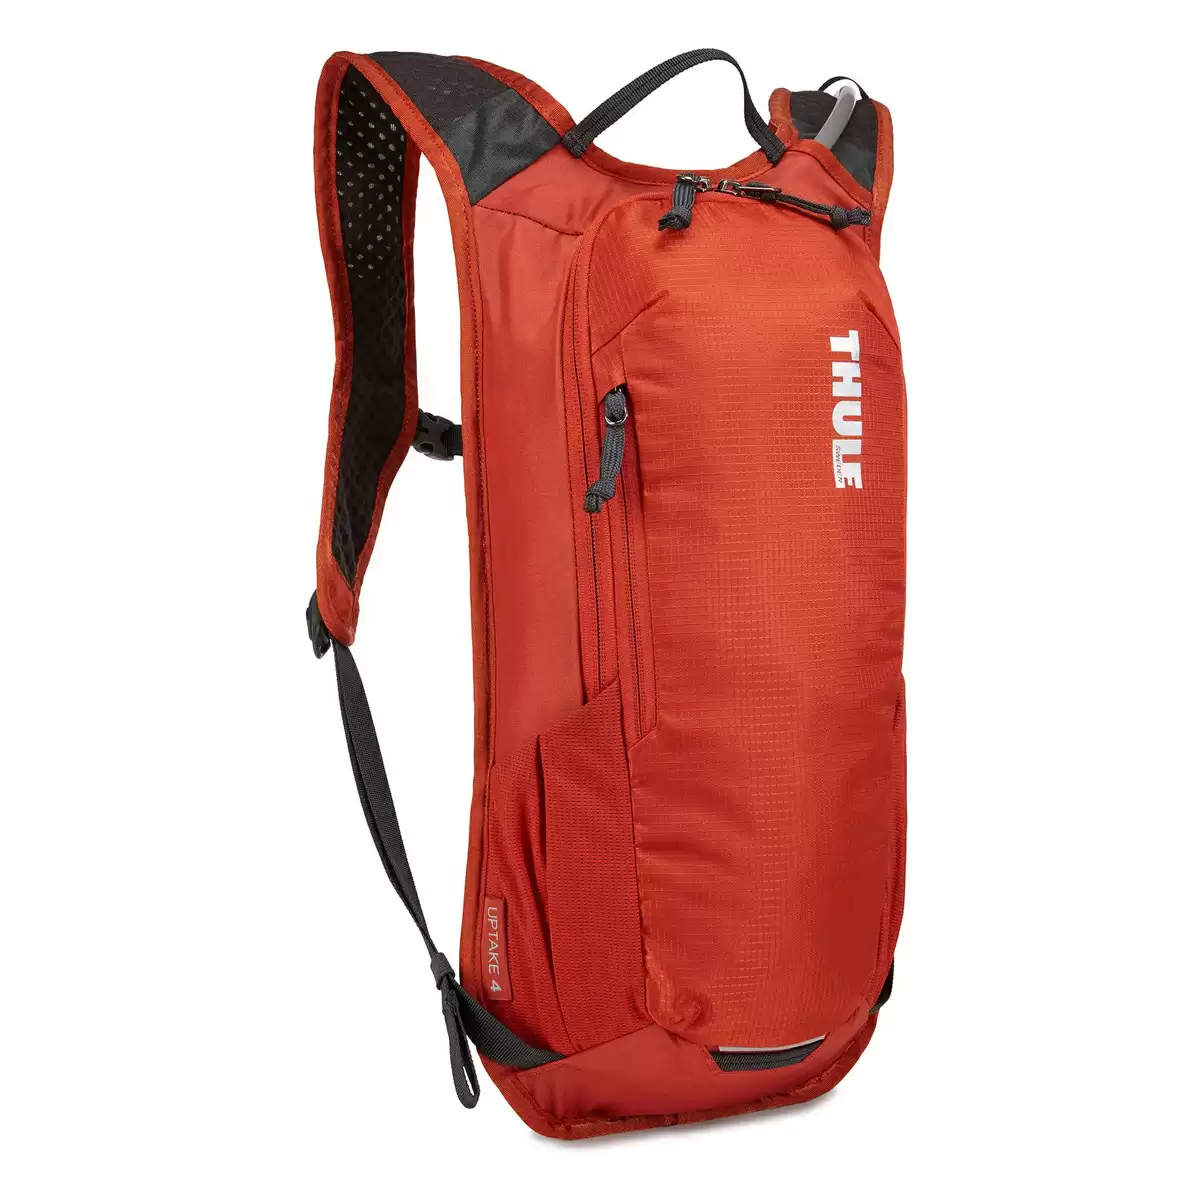 Water backpack UpTake 4L red - image